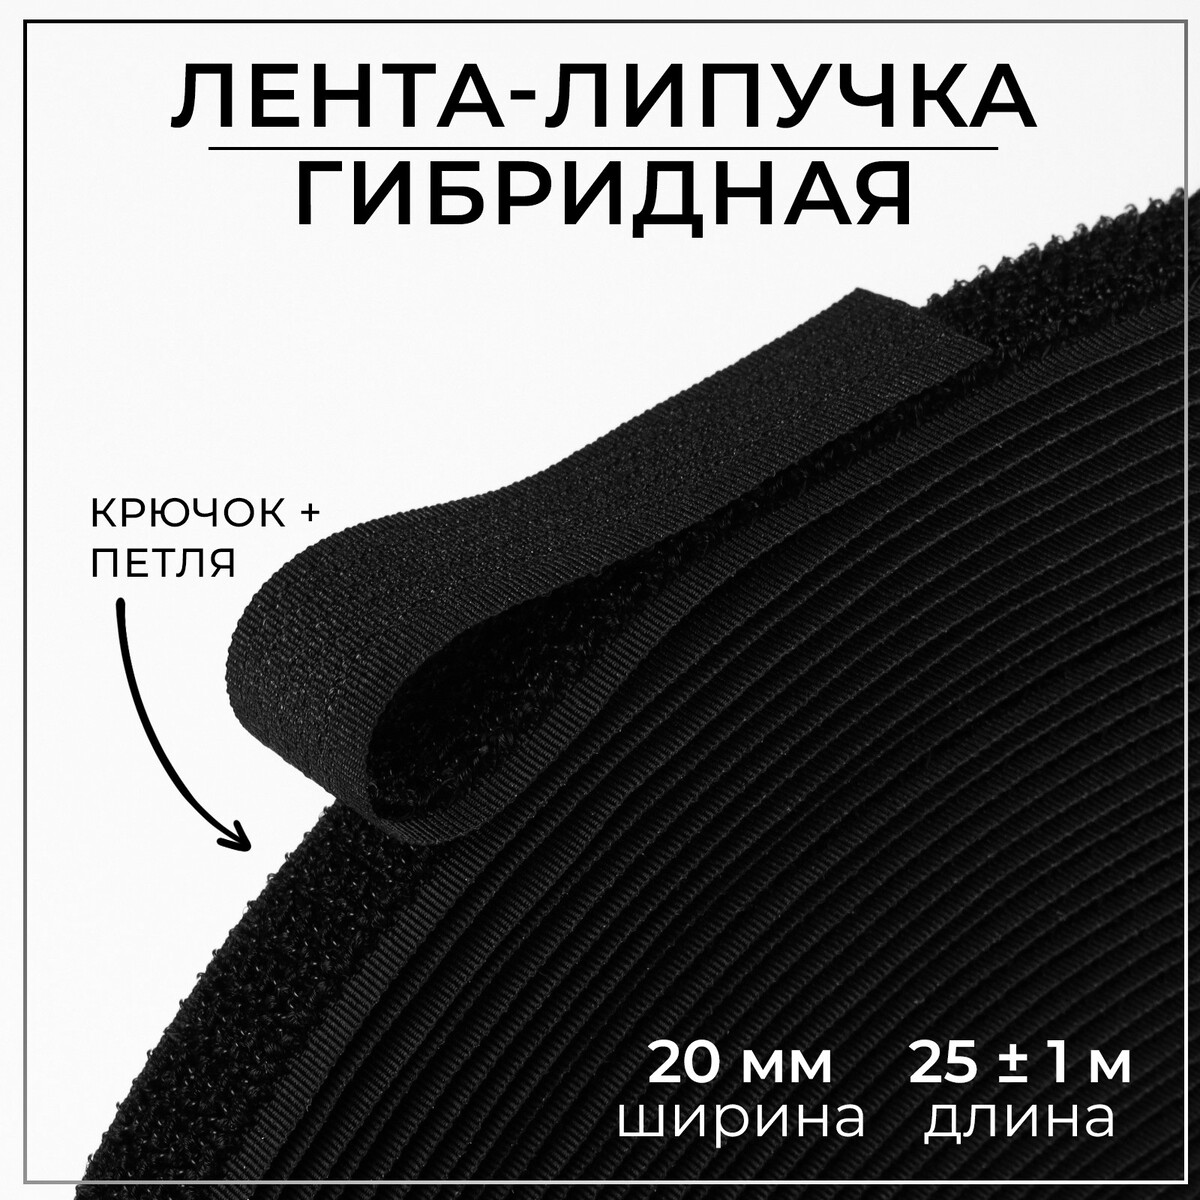 Липучка гибридная, 20 мм × 25 ± 1 м, цвет черный липучка гибридная 20 мм × 25 ± 1 м